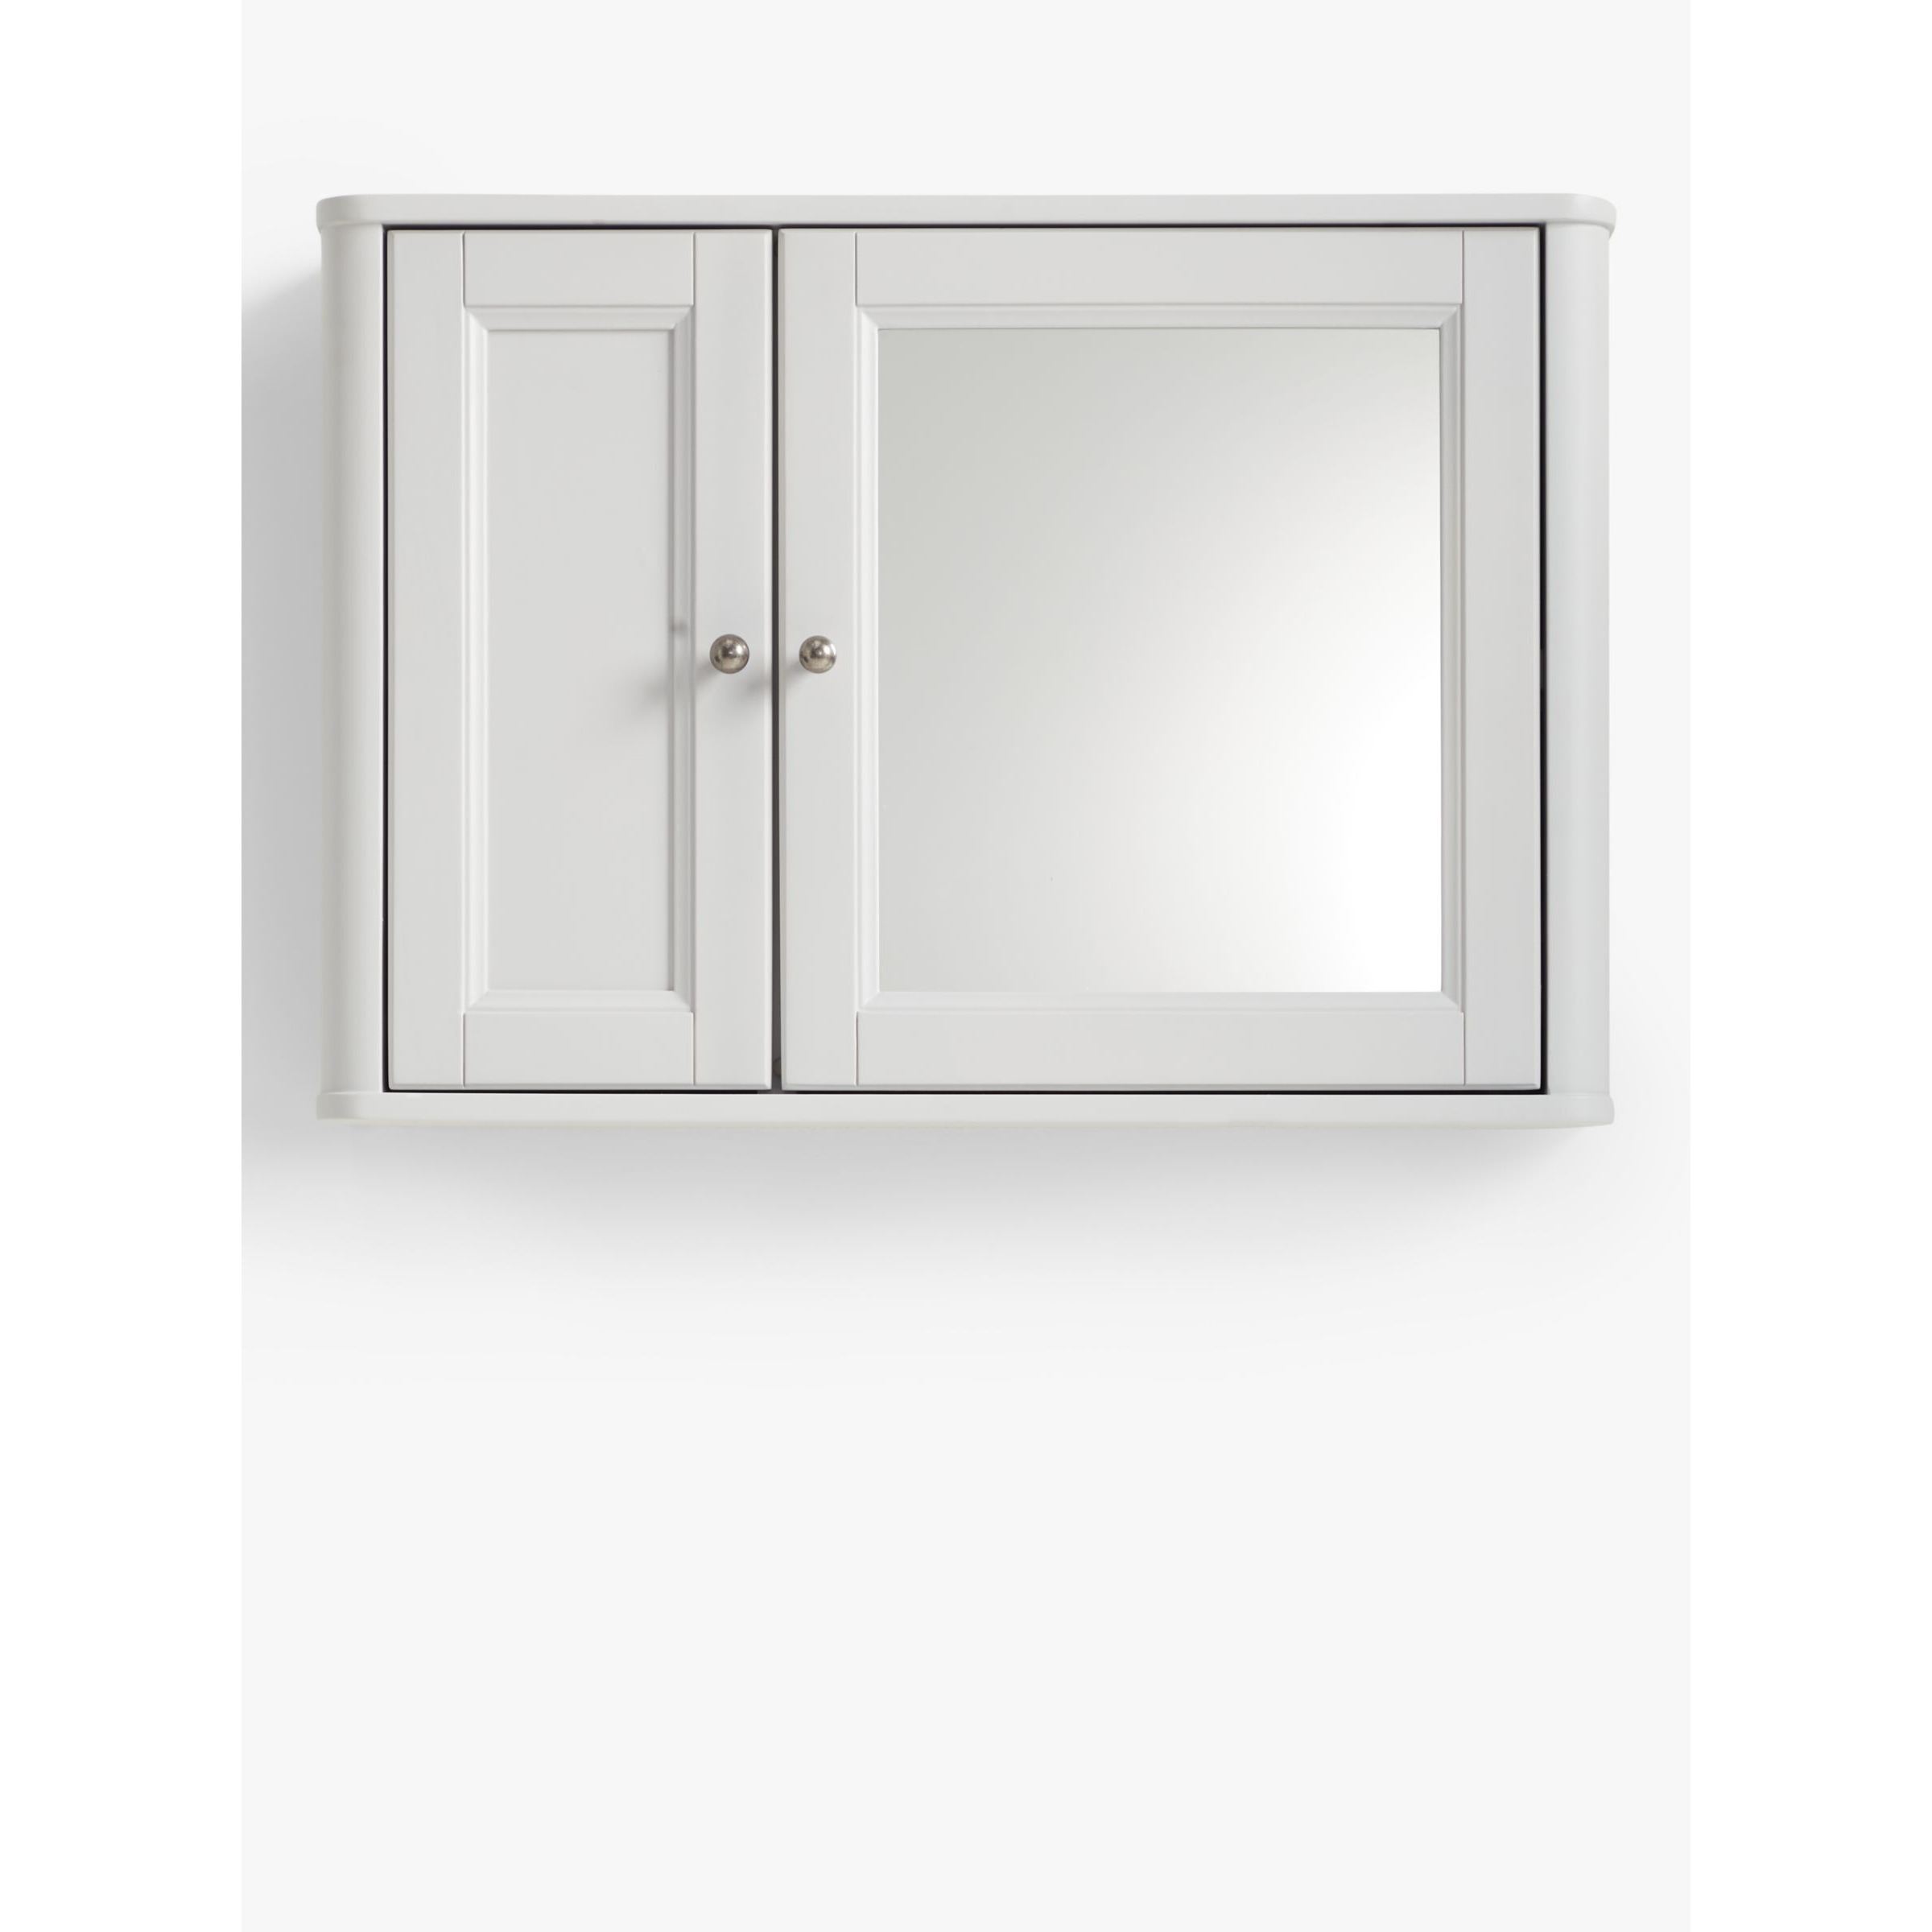 John Lewis Portsman Double Bathroom Wall Cabinet - image 1